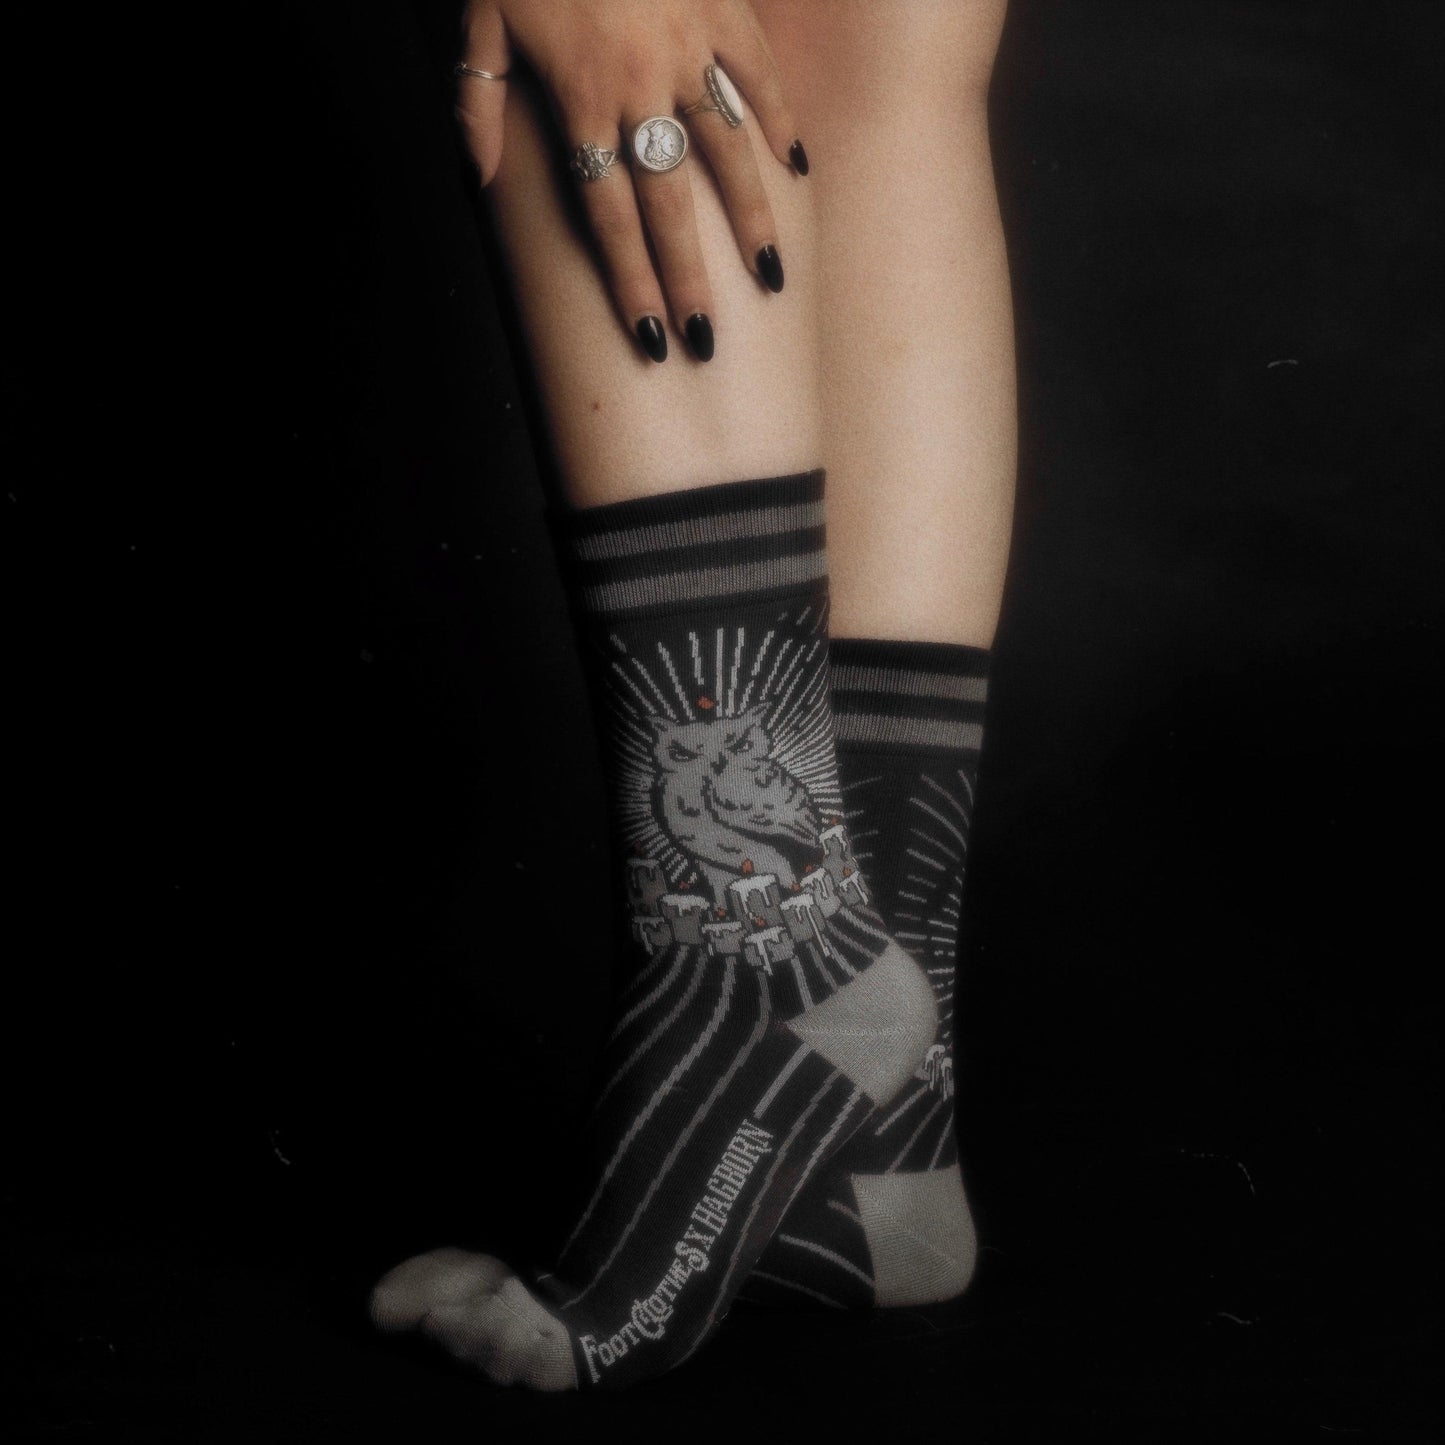 Night Owl FootClothes x Hagborn Collab Crew Socks